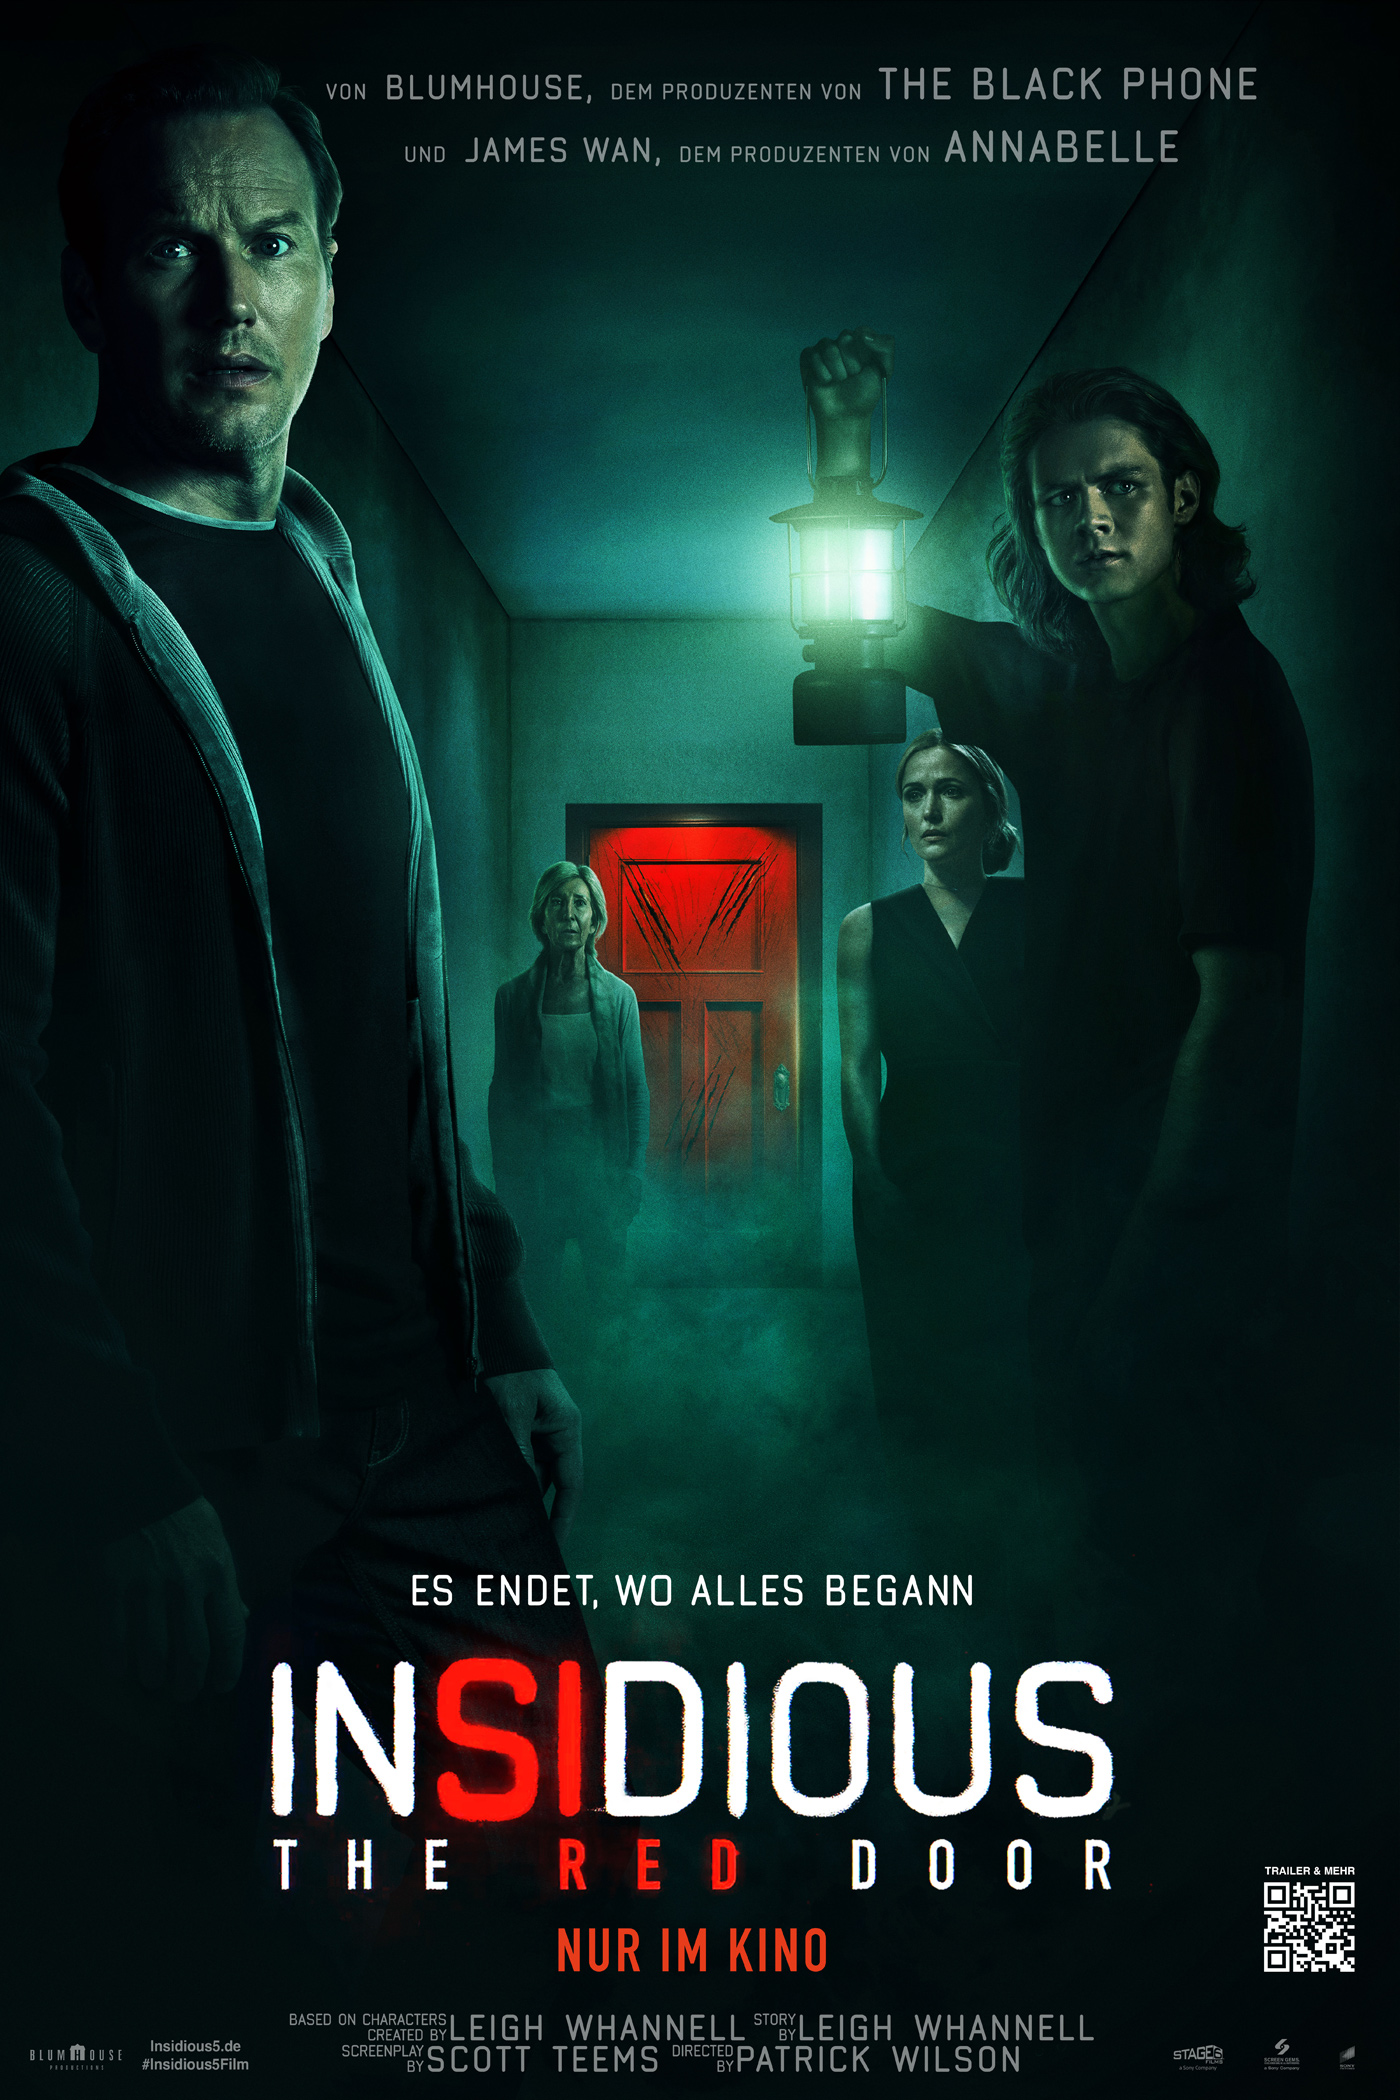 INSIDIOUS: THE RED DOOR